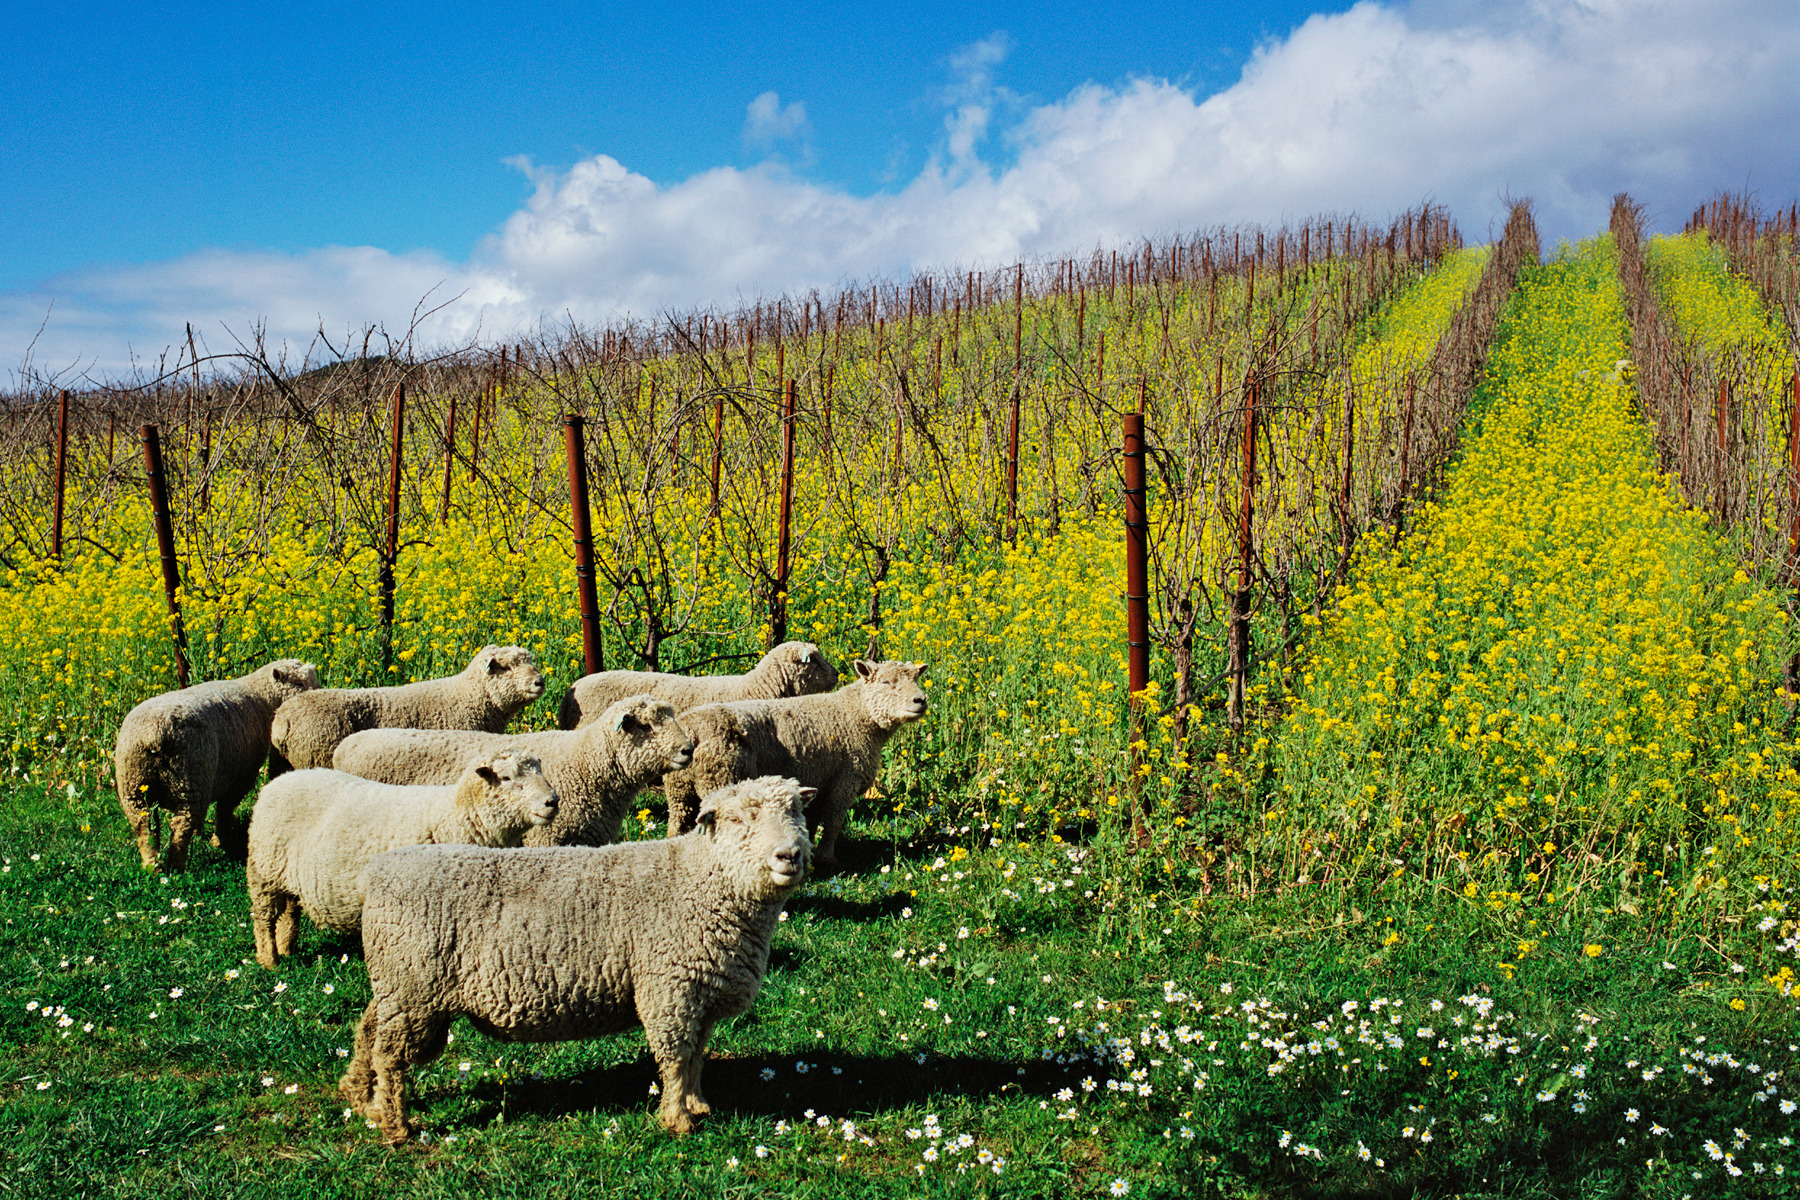 Sheep in the Vineyard